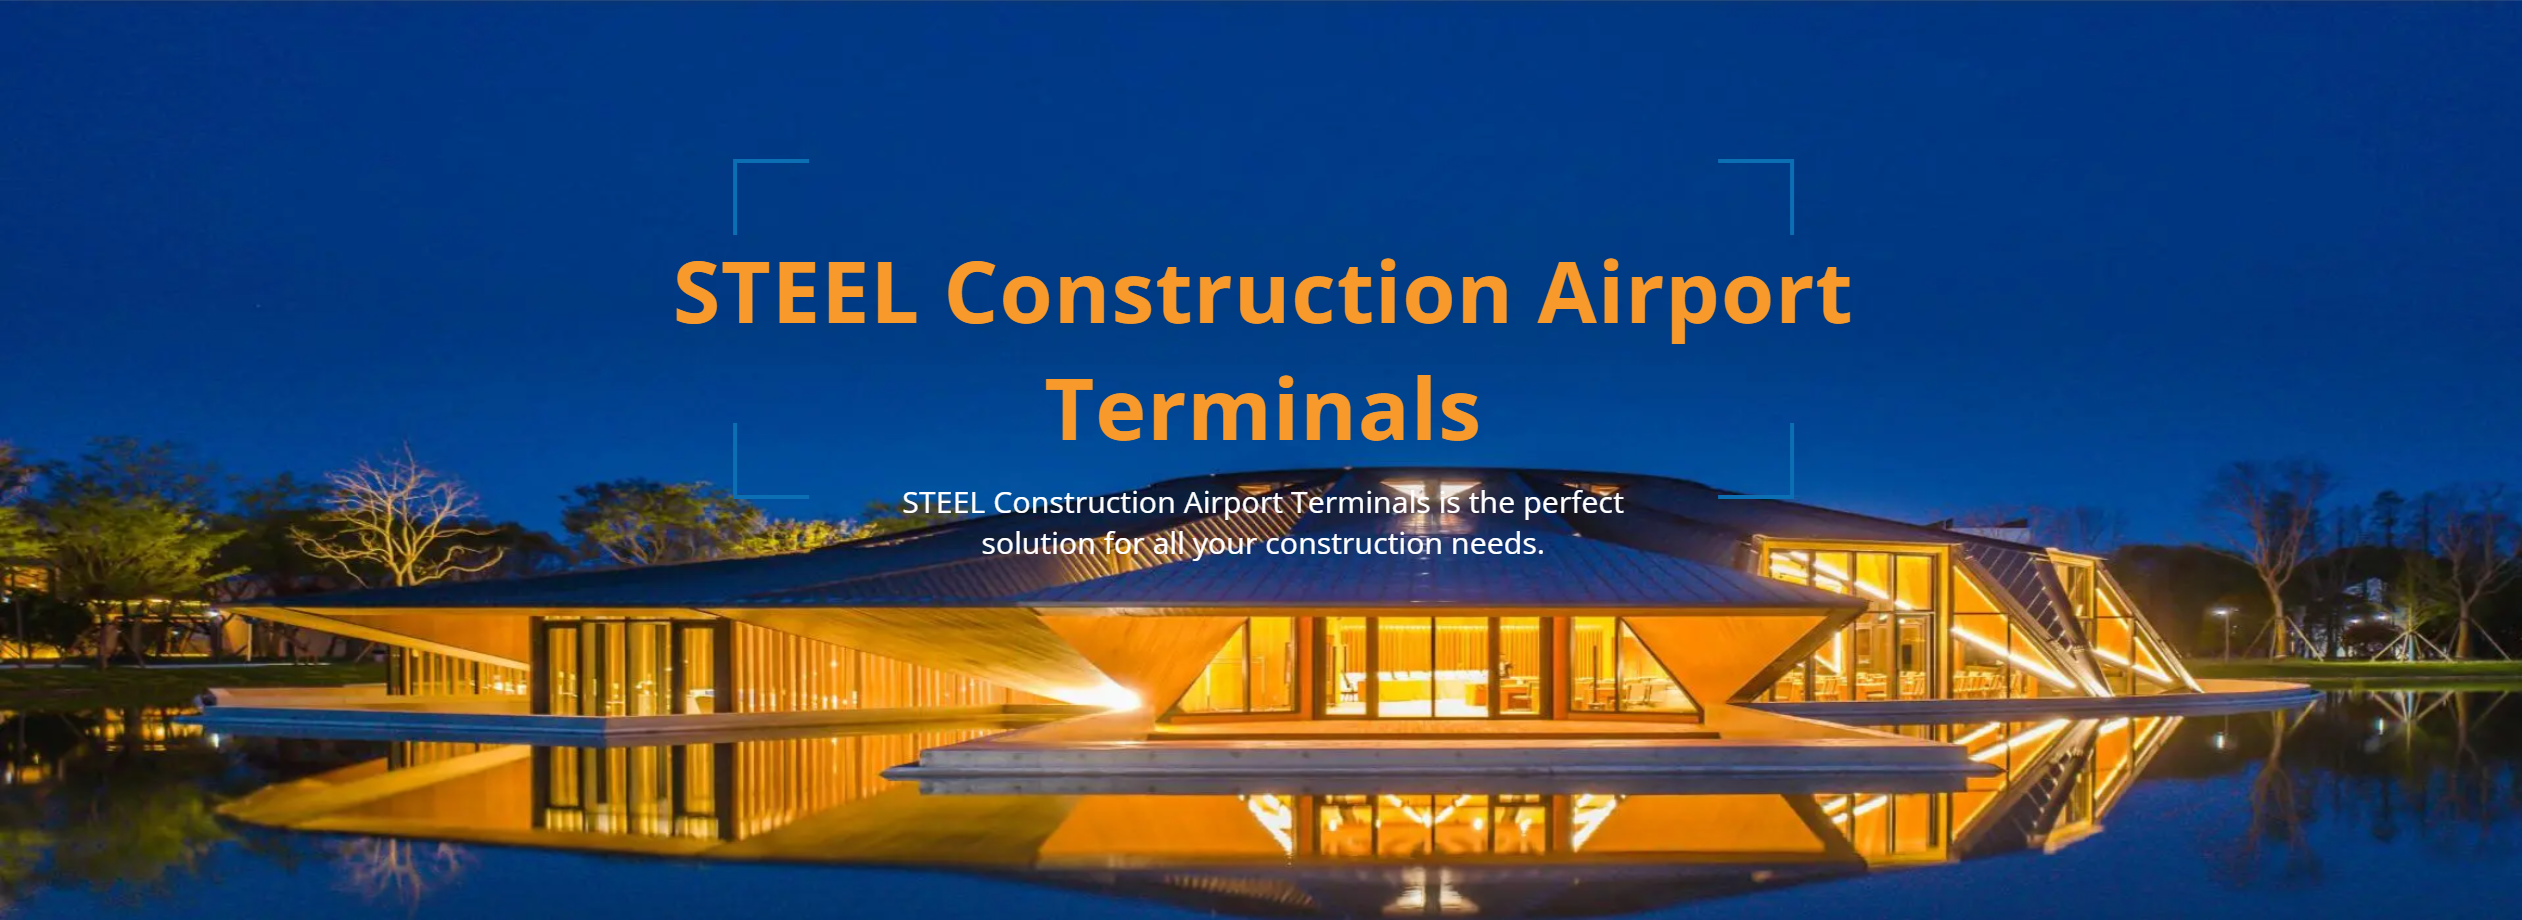 STEEL Construction Airport Terminals